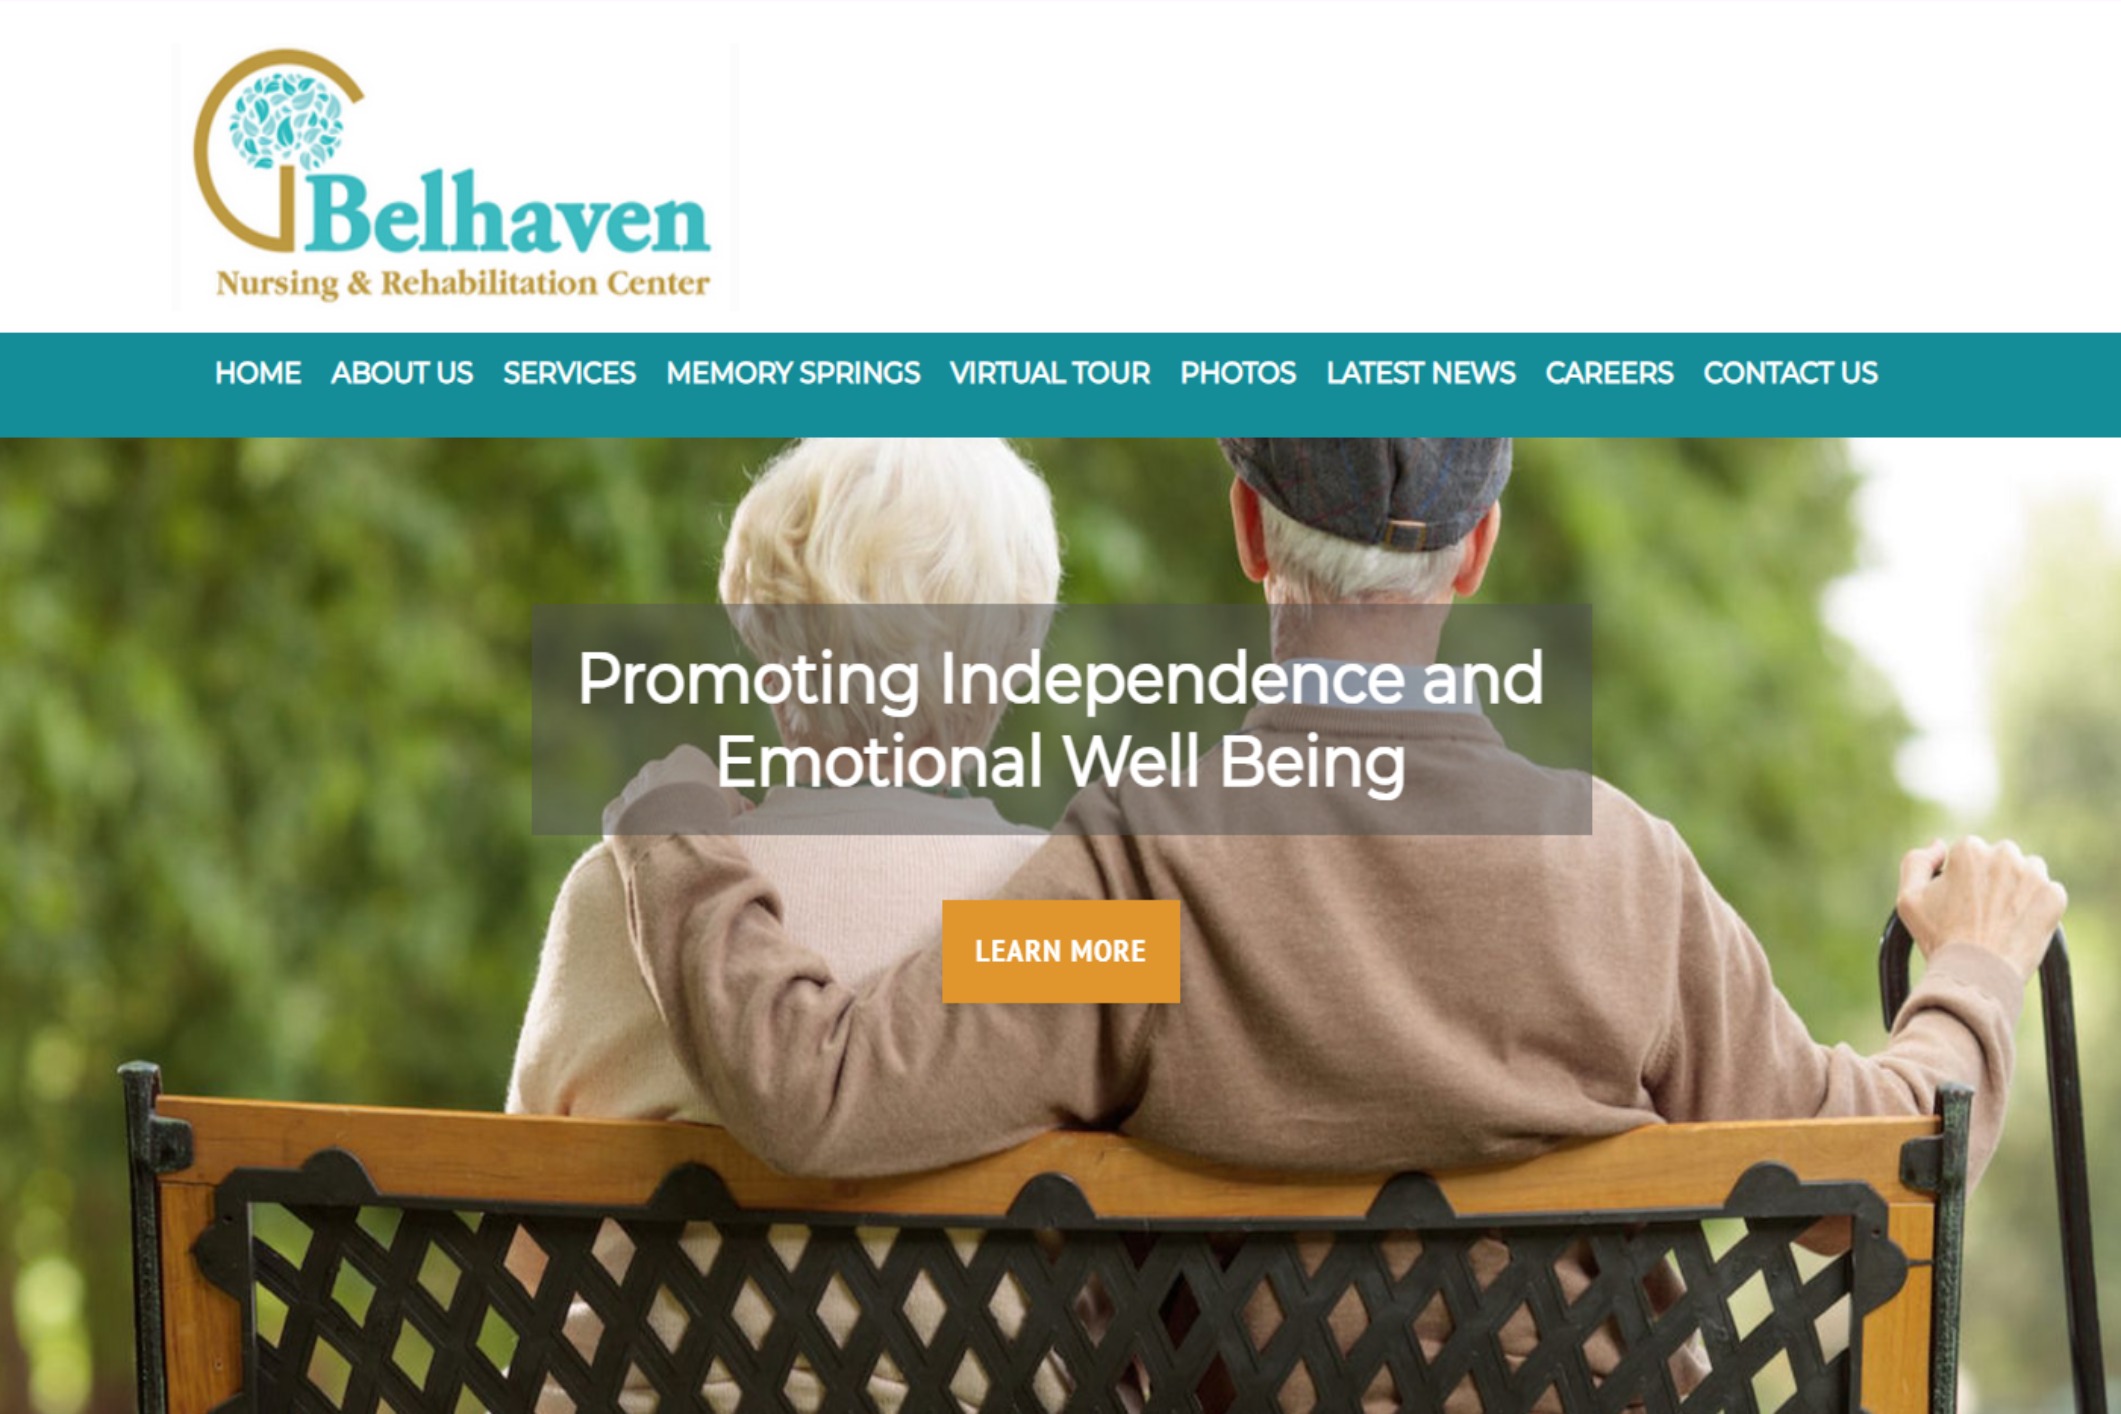 belhaven nursing home